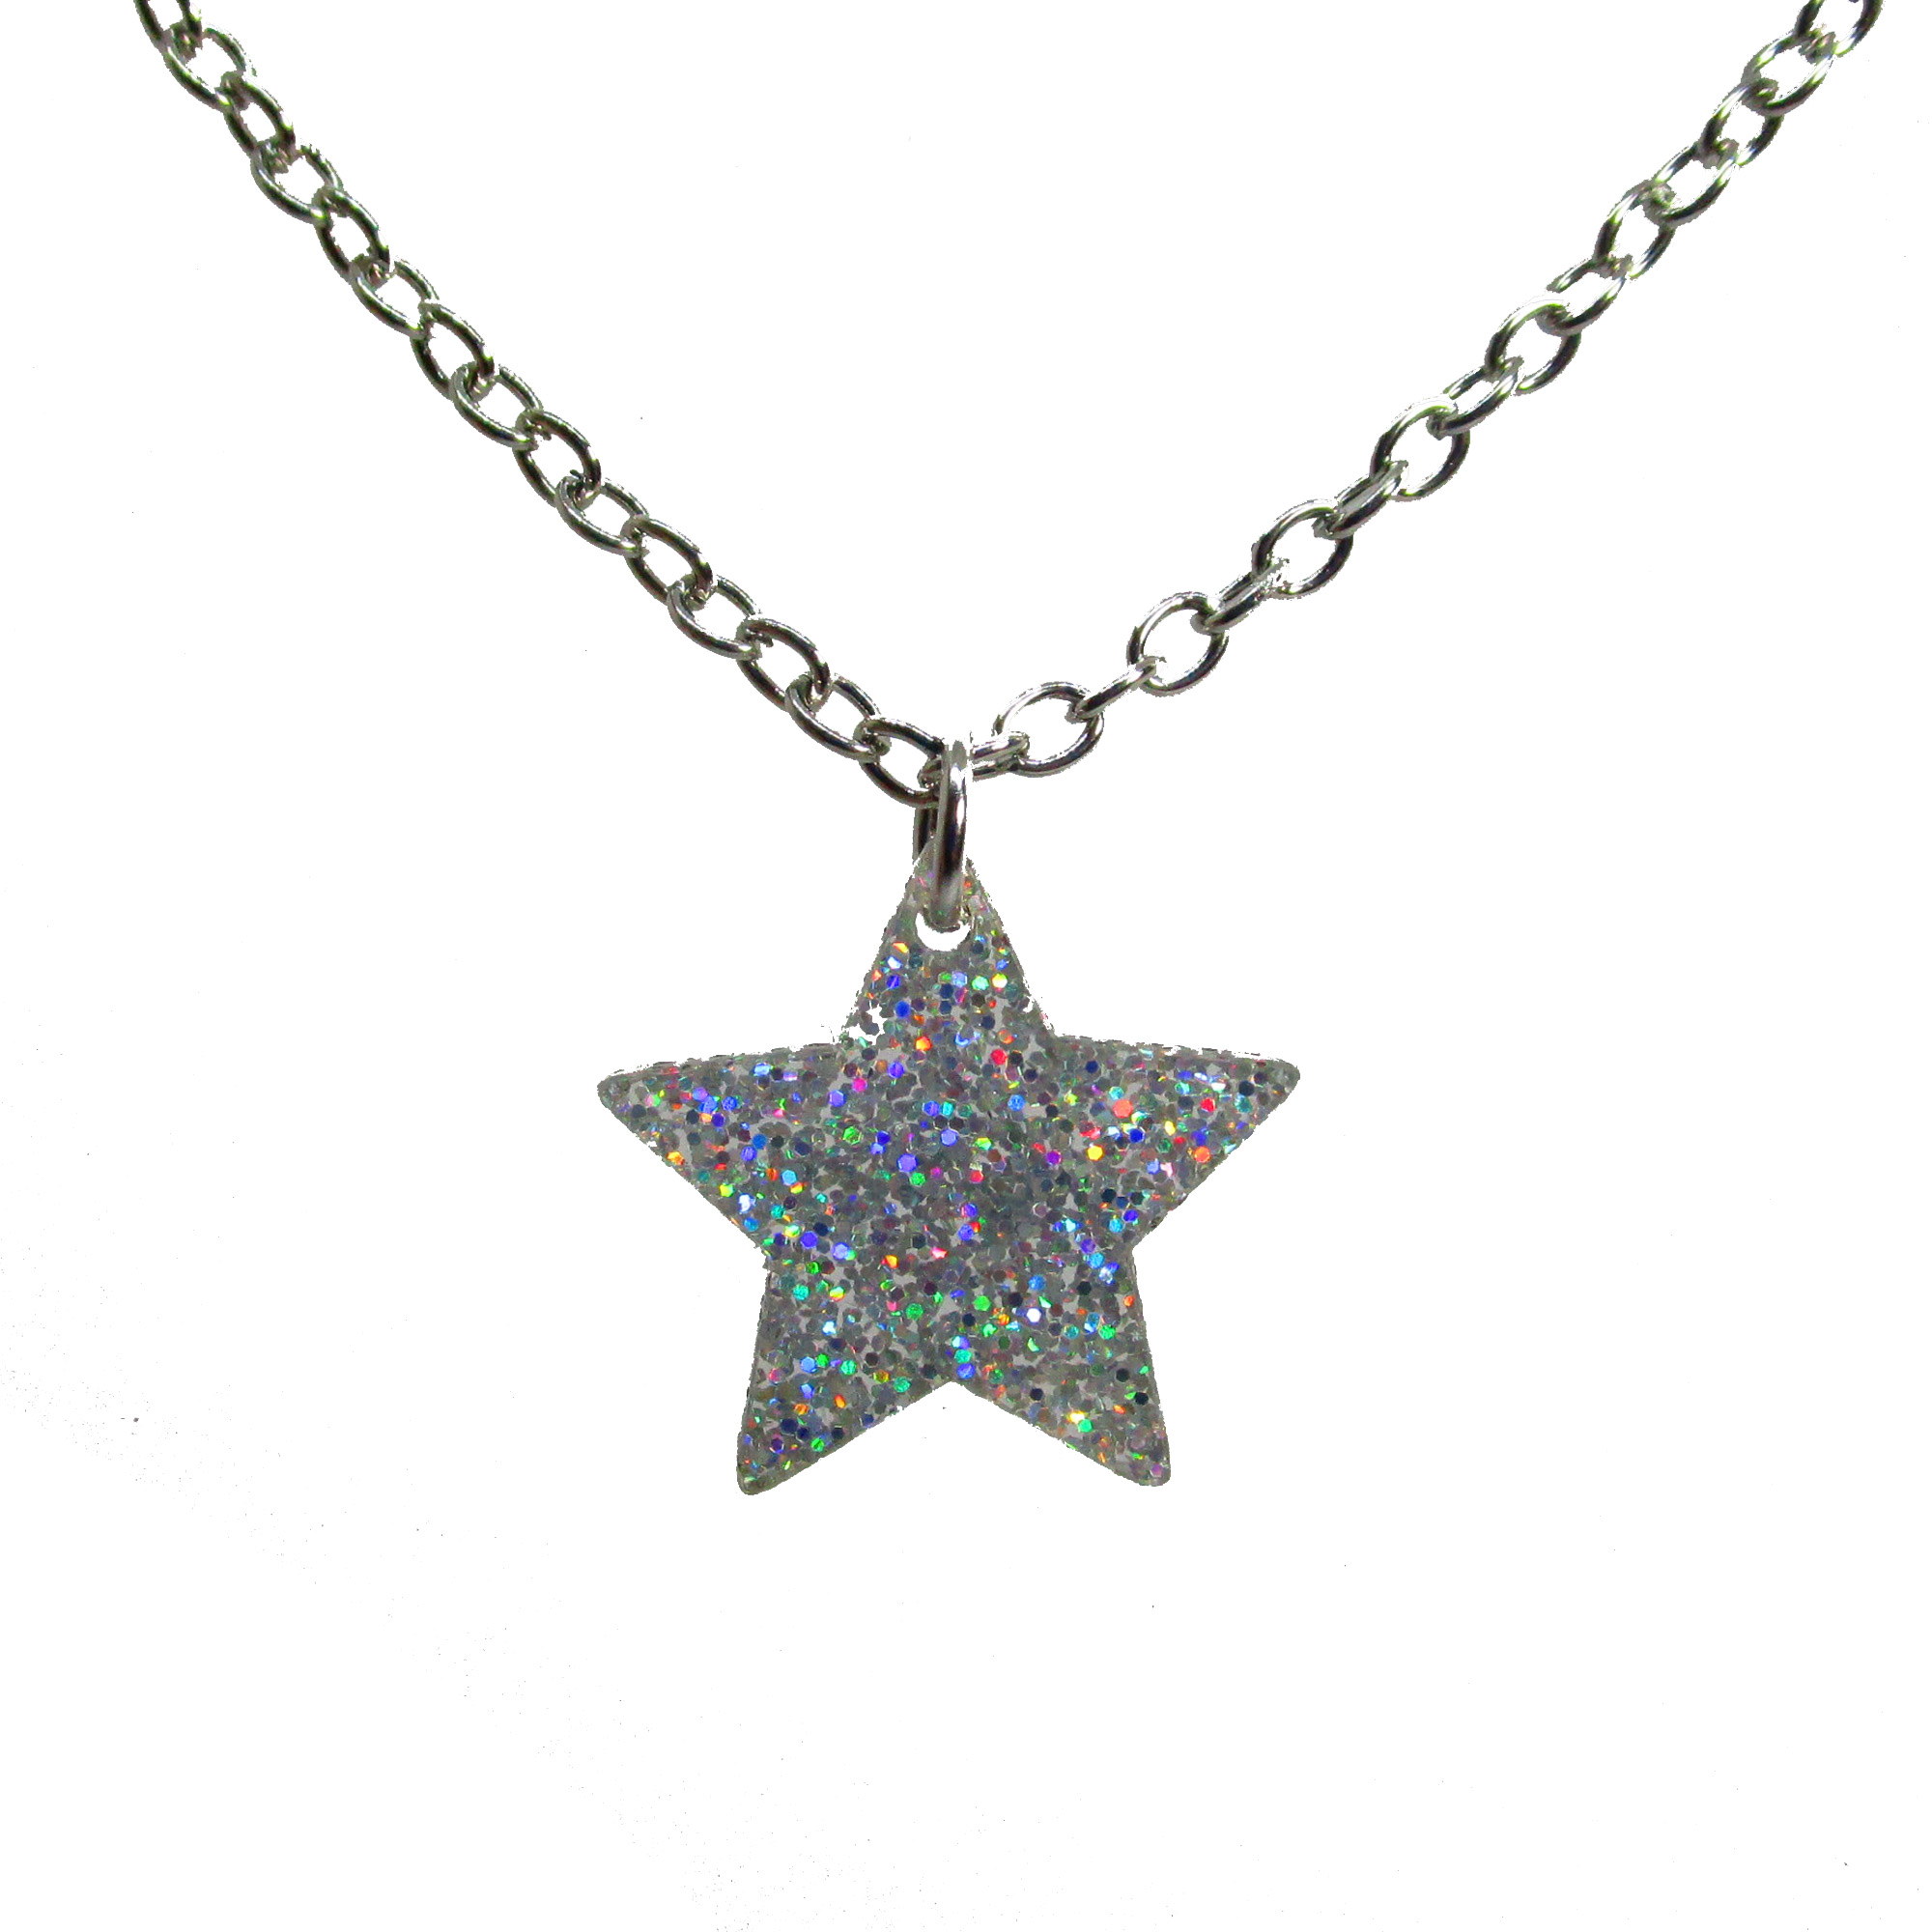 Outline Star Charms Hollow Star Pendant Cute Star Drop (15pcs / 10mm x 12mm / Silver / 2 Sided) Kawaii Jewelry Mini Add on Charm CHM2213